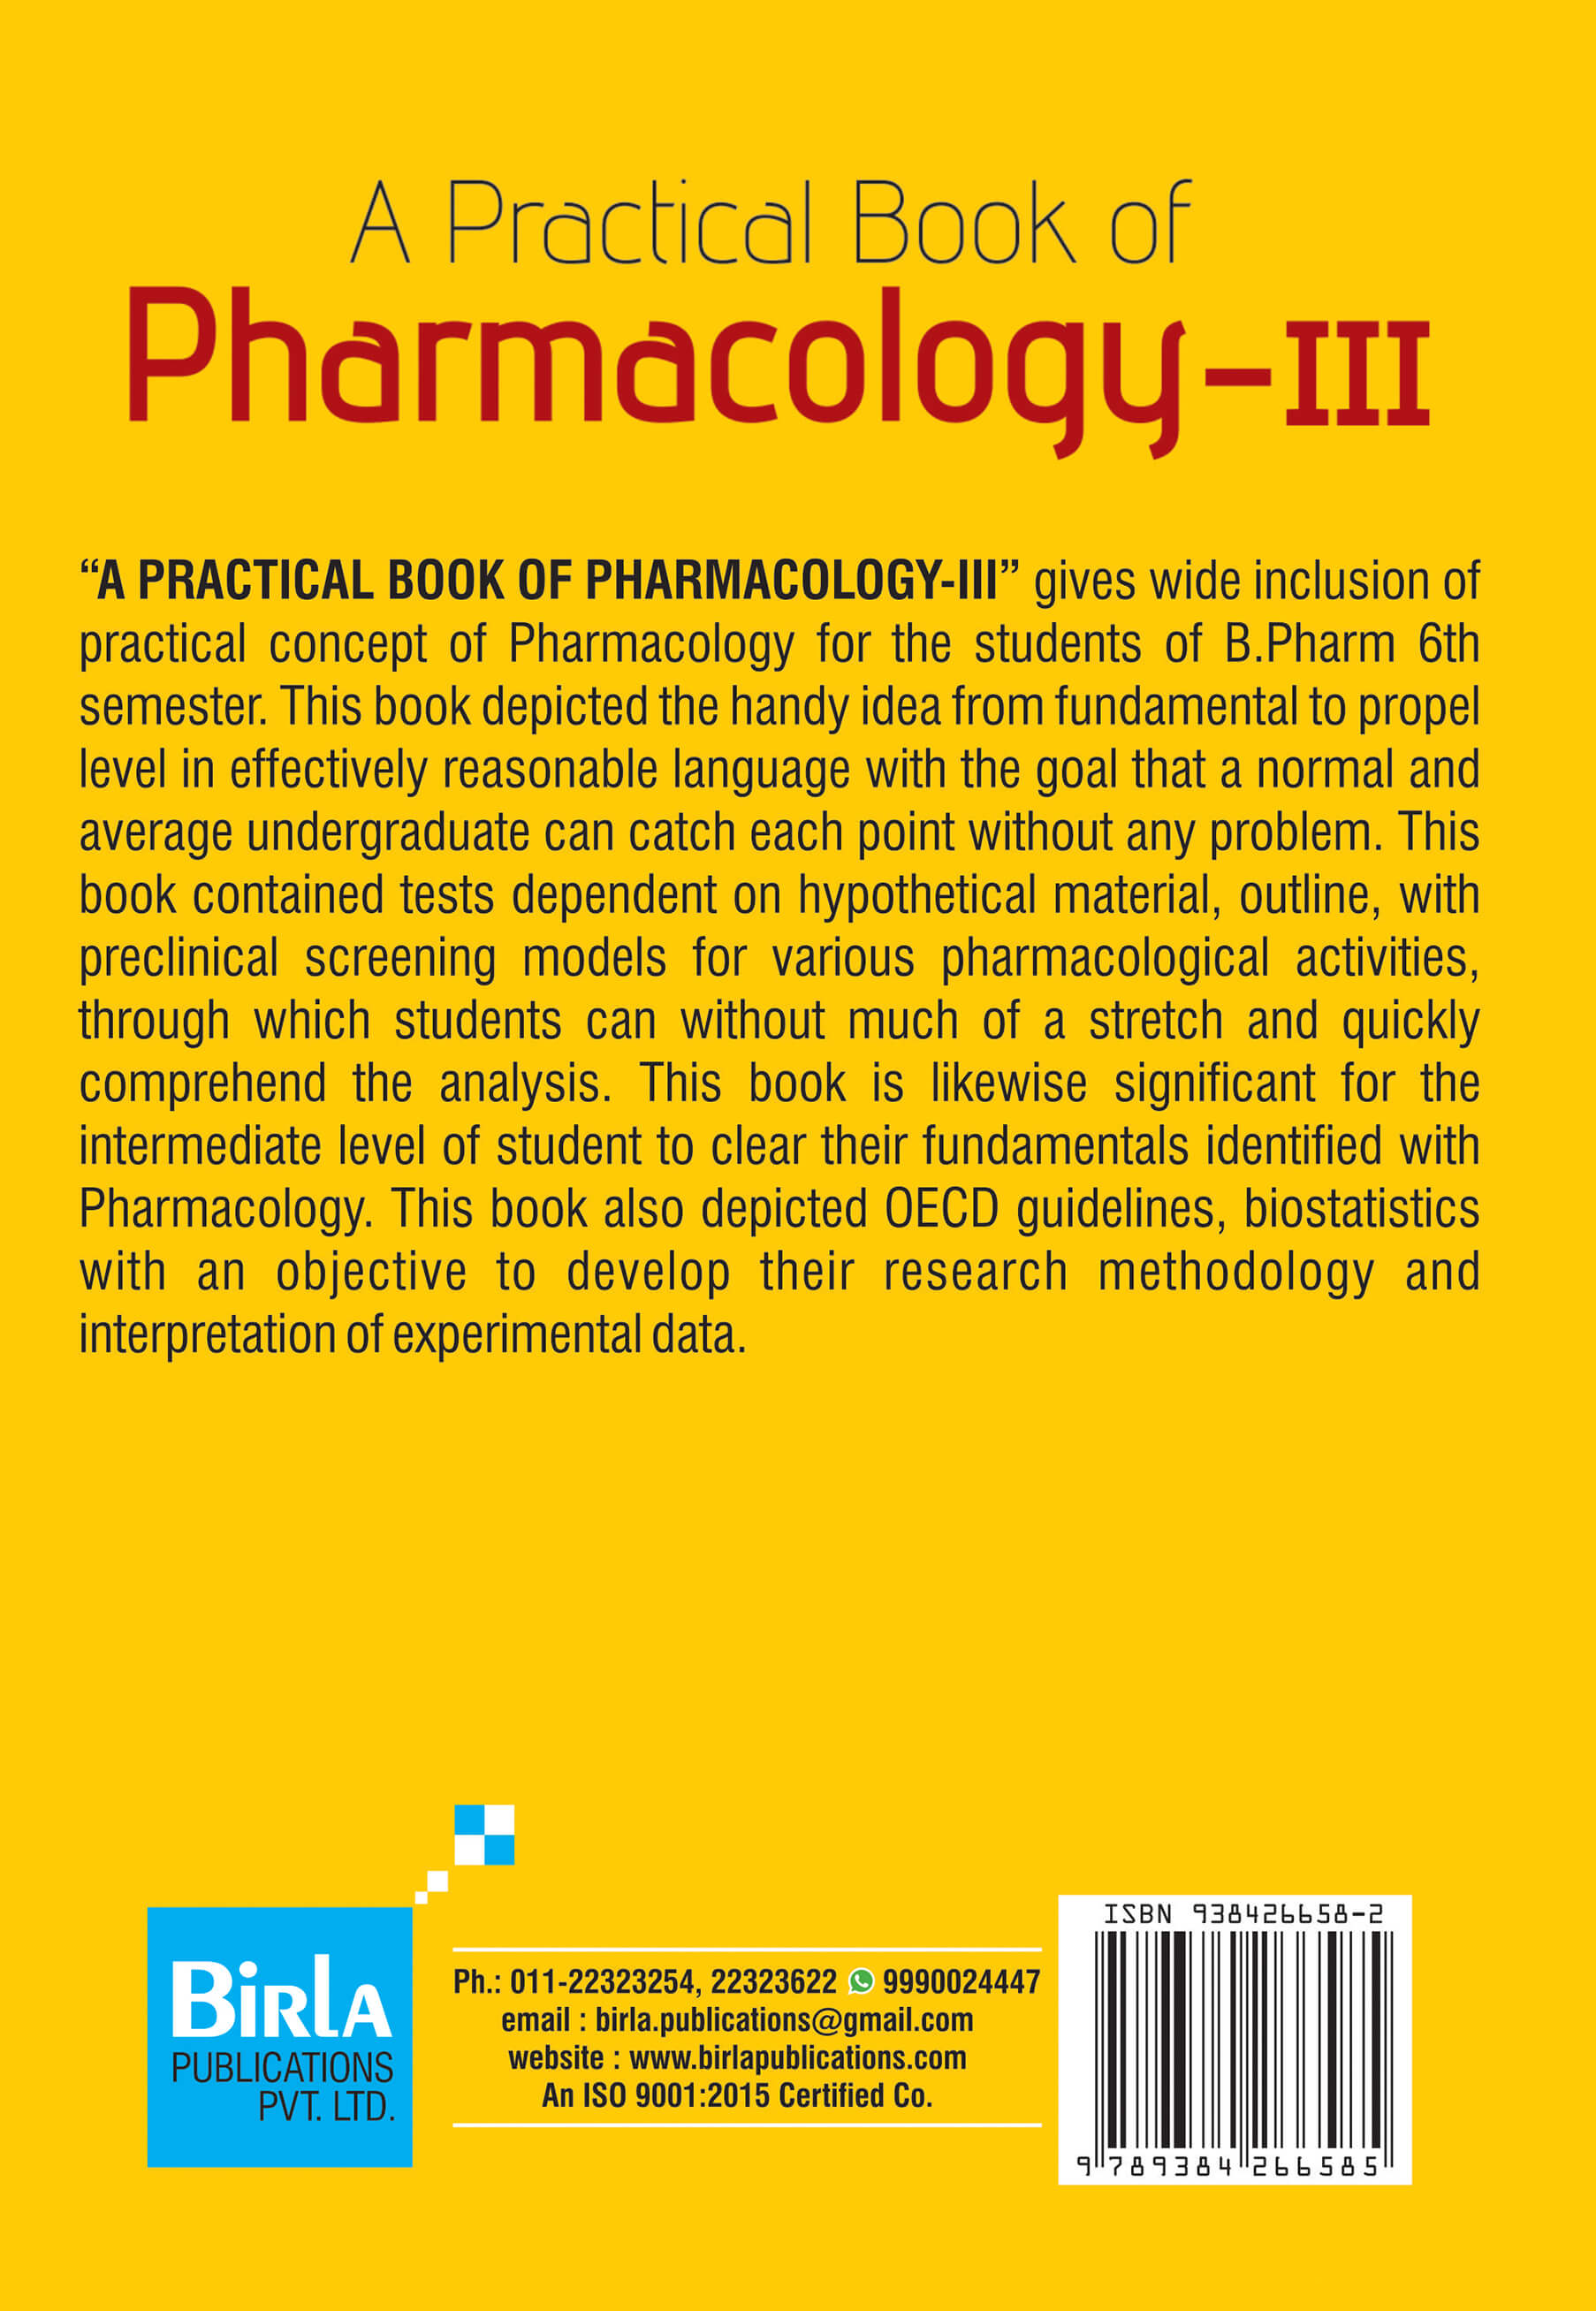 A PRACTICAL BOOK OF PHARMACOLOGY-III